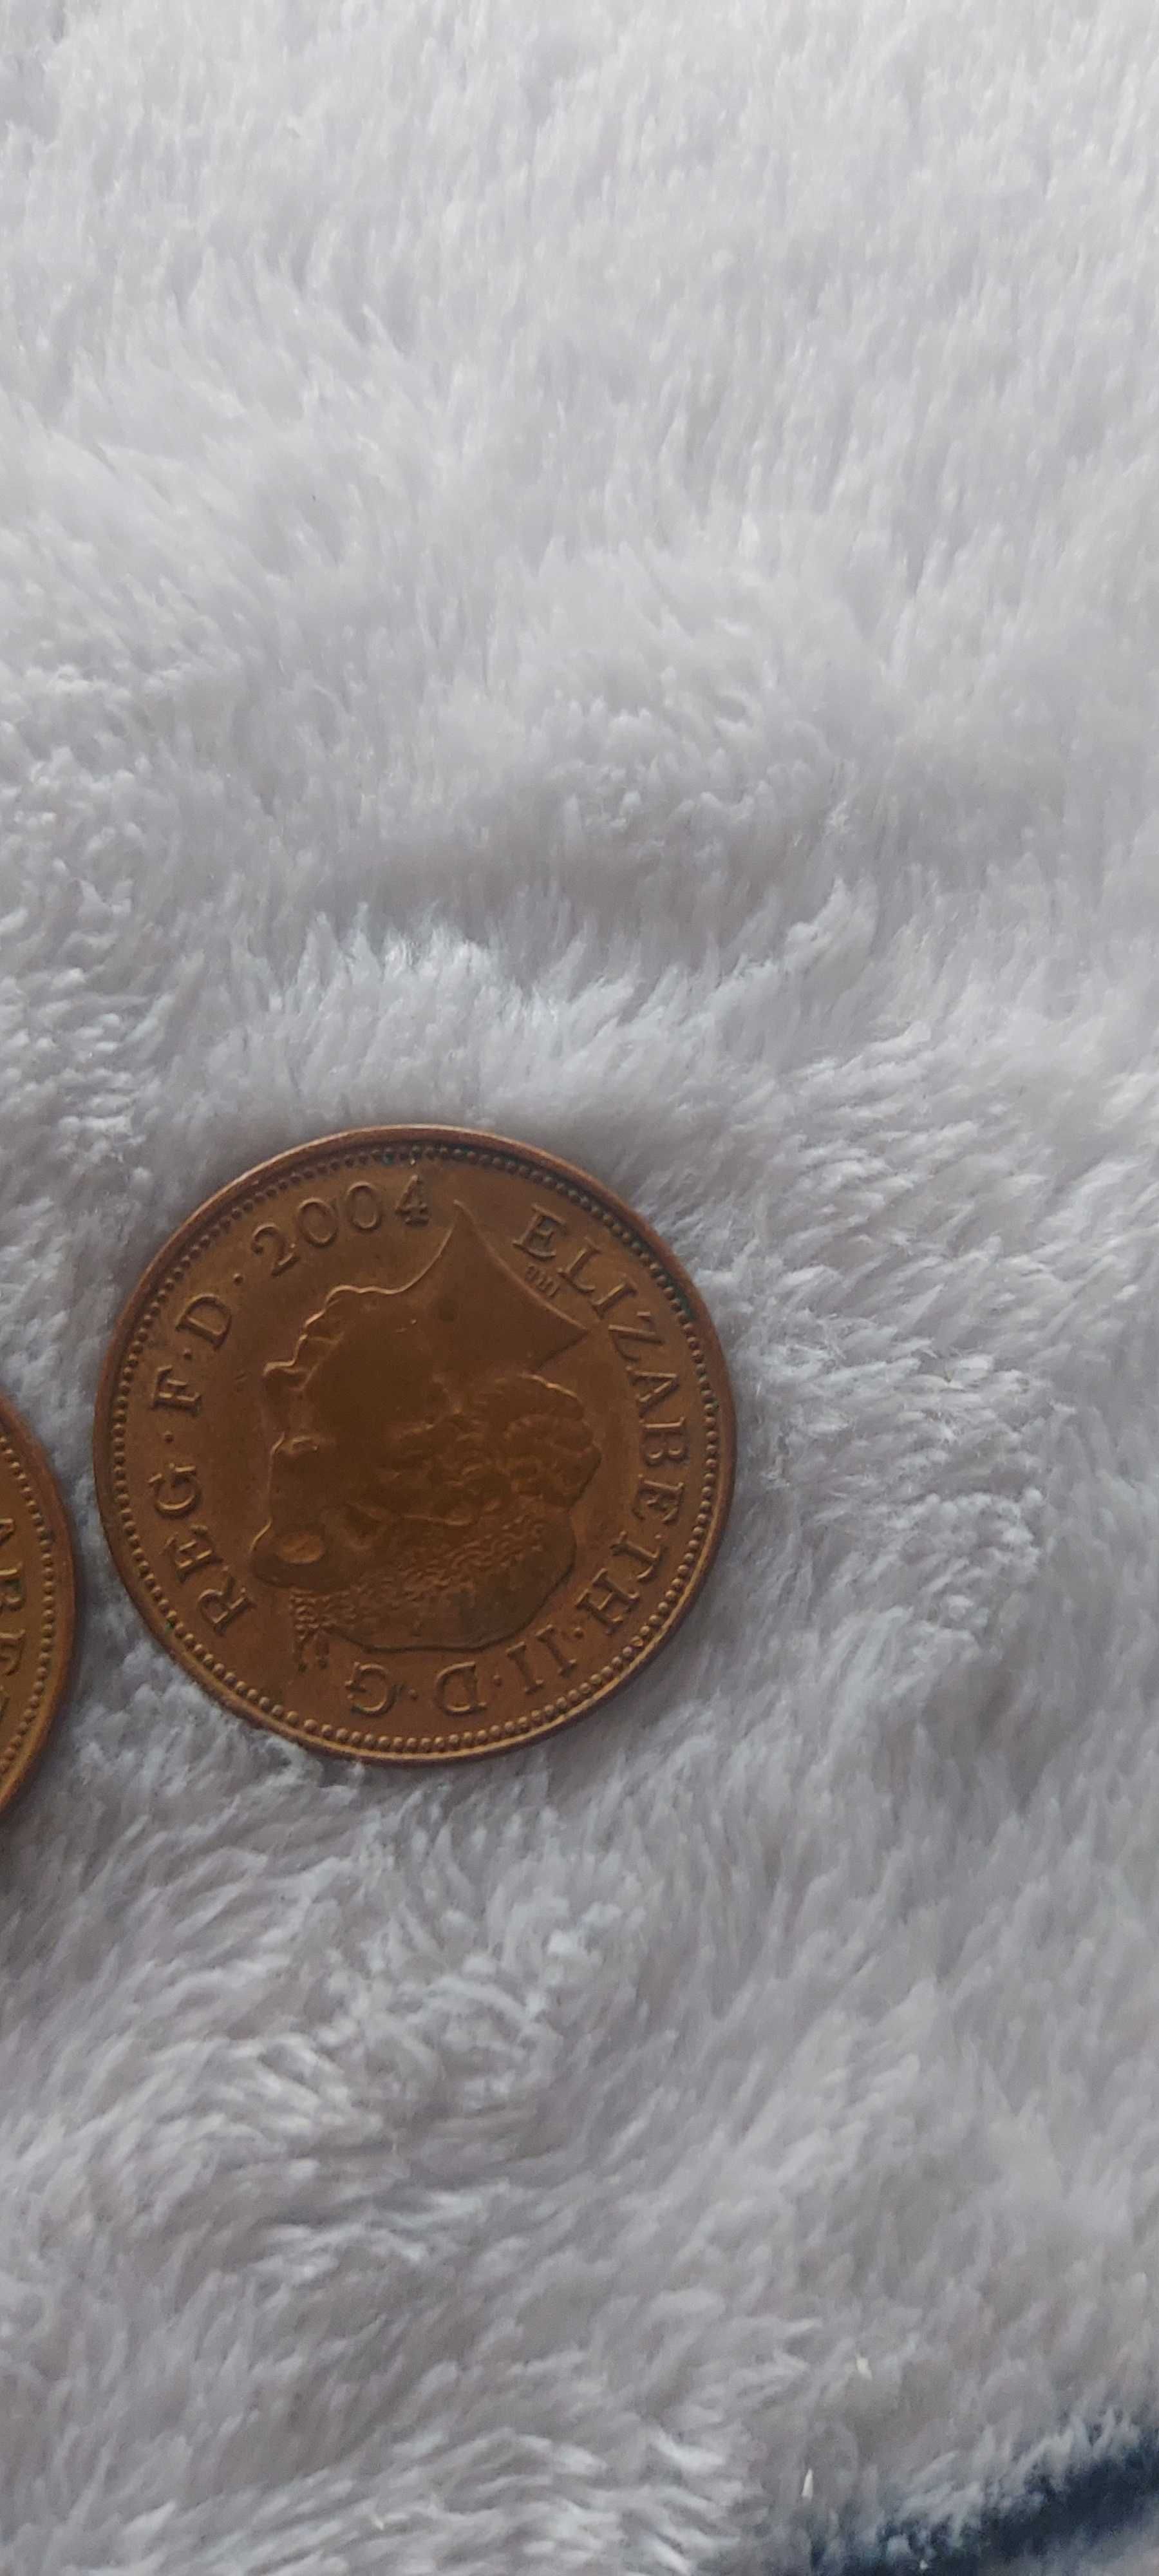 Monede vechi foarte rare 2 new pence 1971 si 1980 si 2 two pence